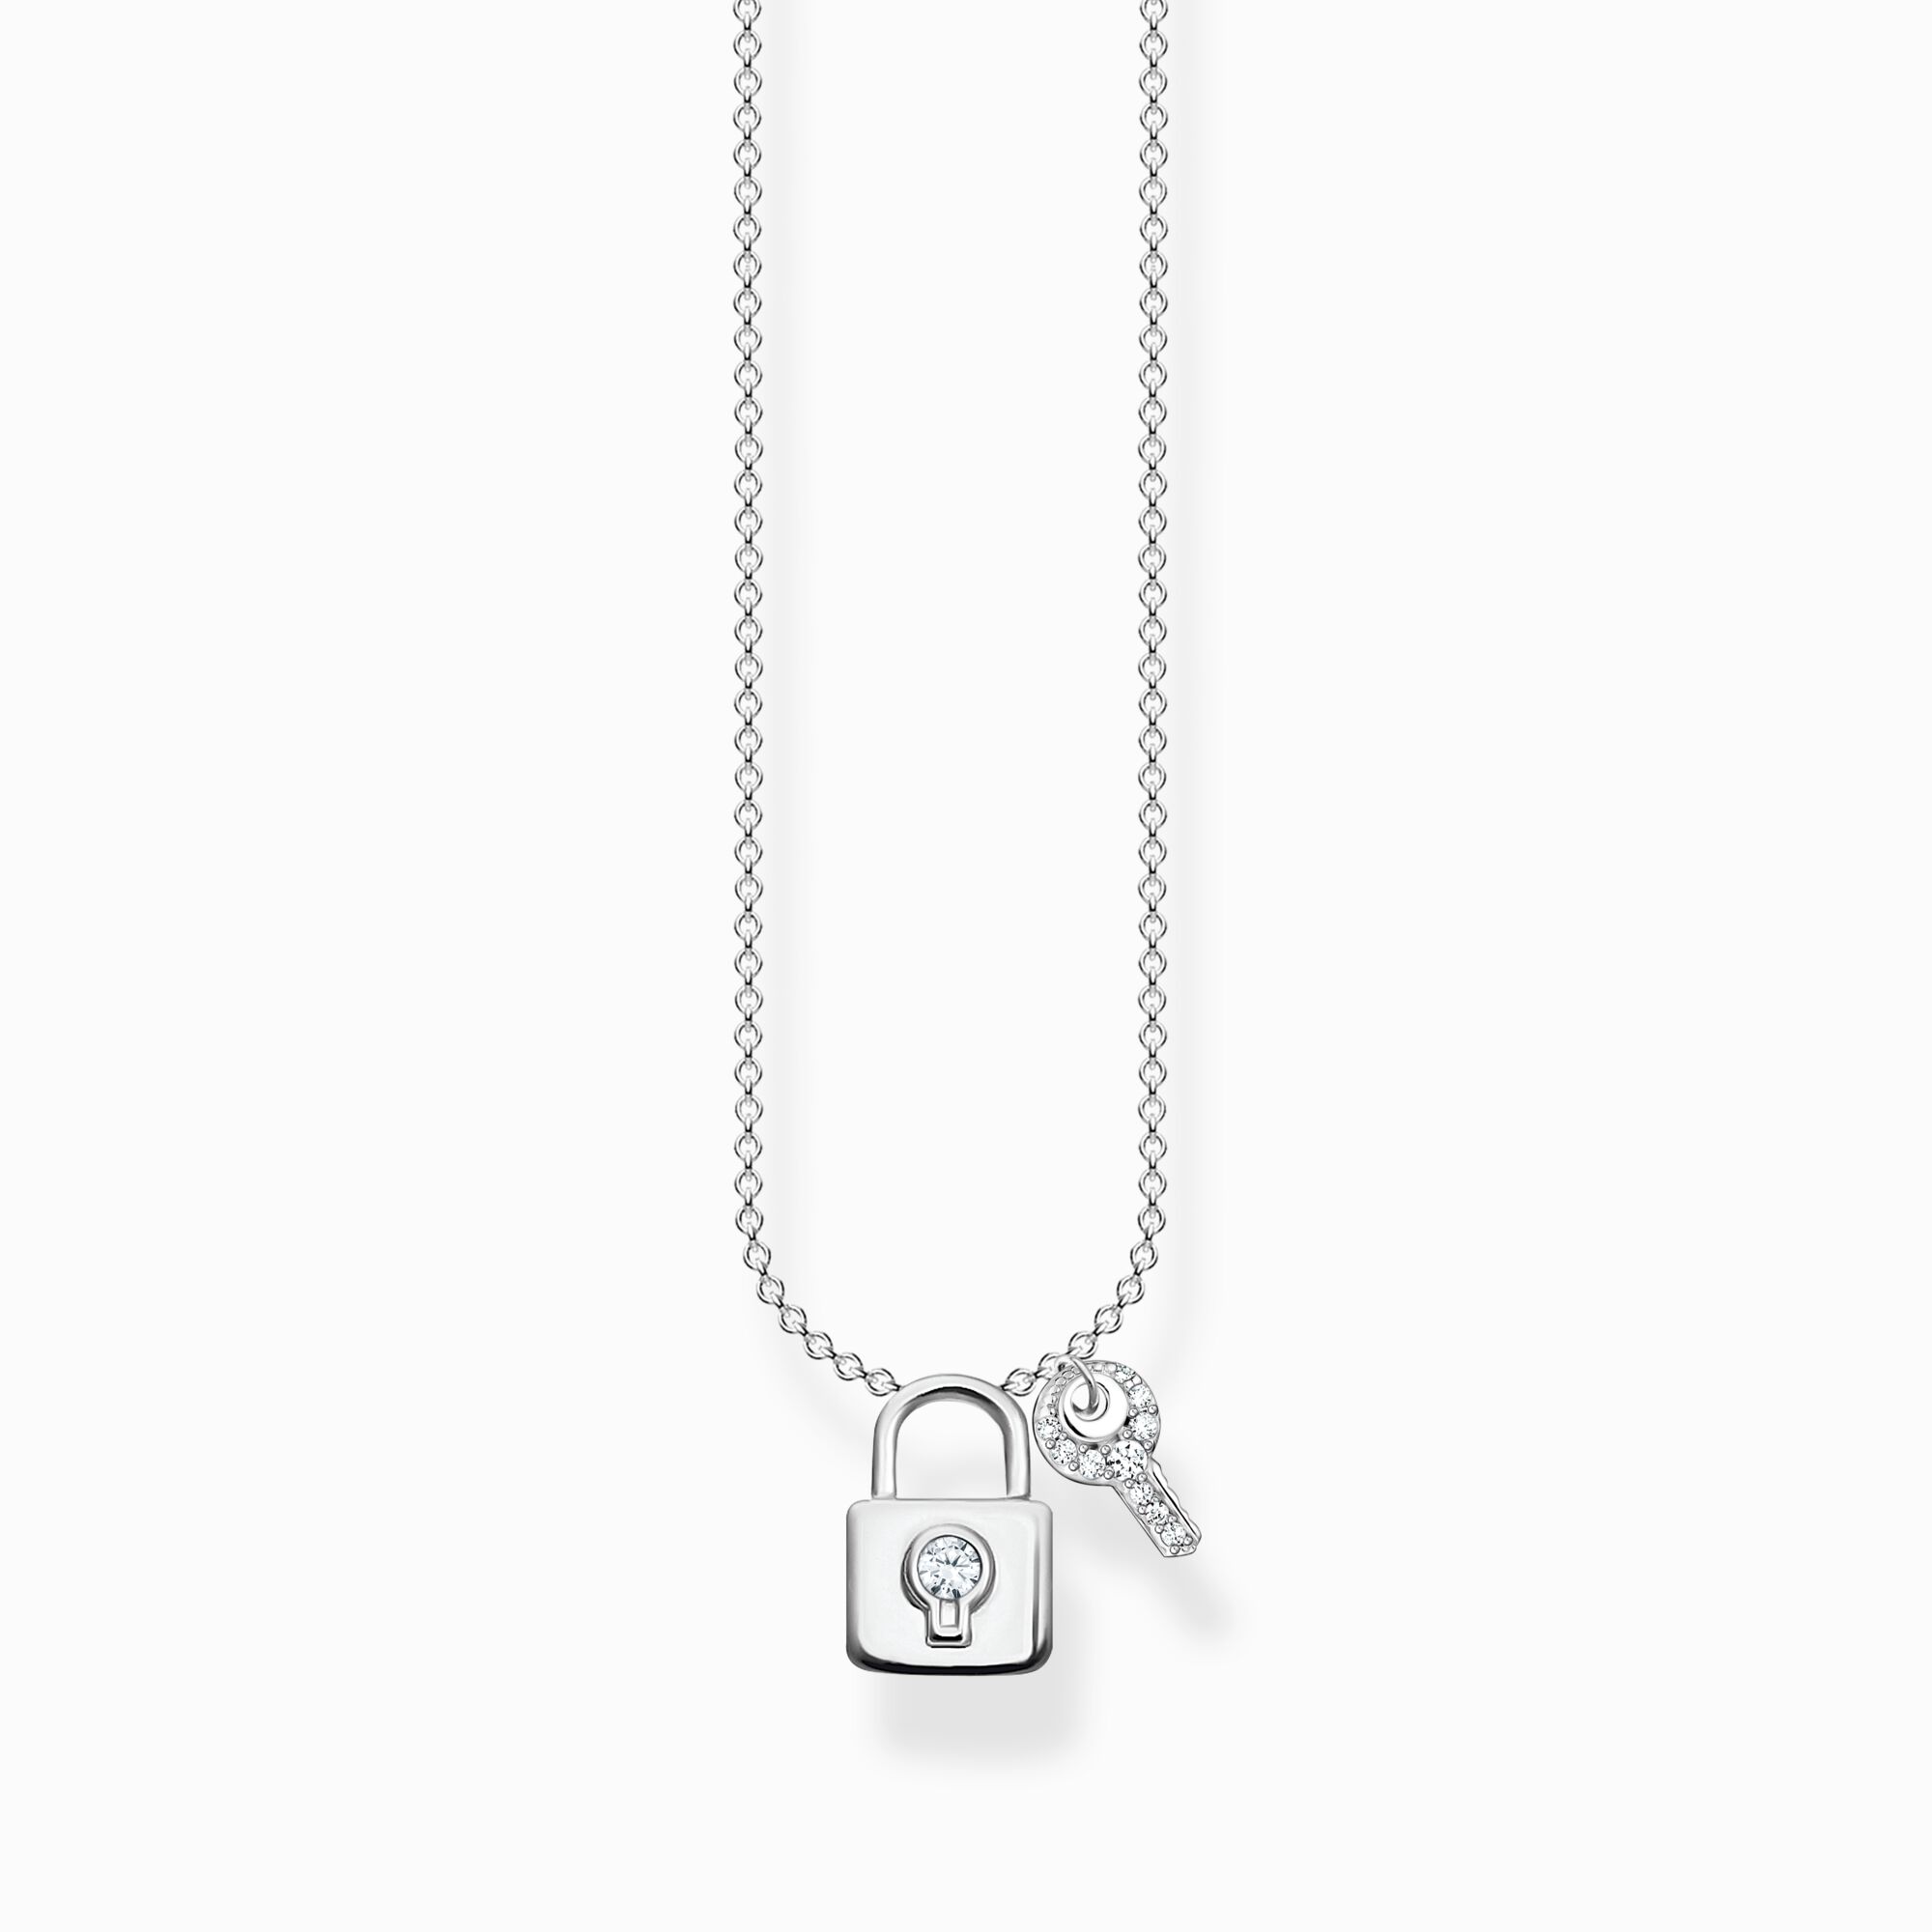 Thomas Sabo Necklace Lock with Key Silver